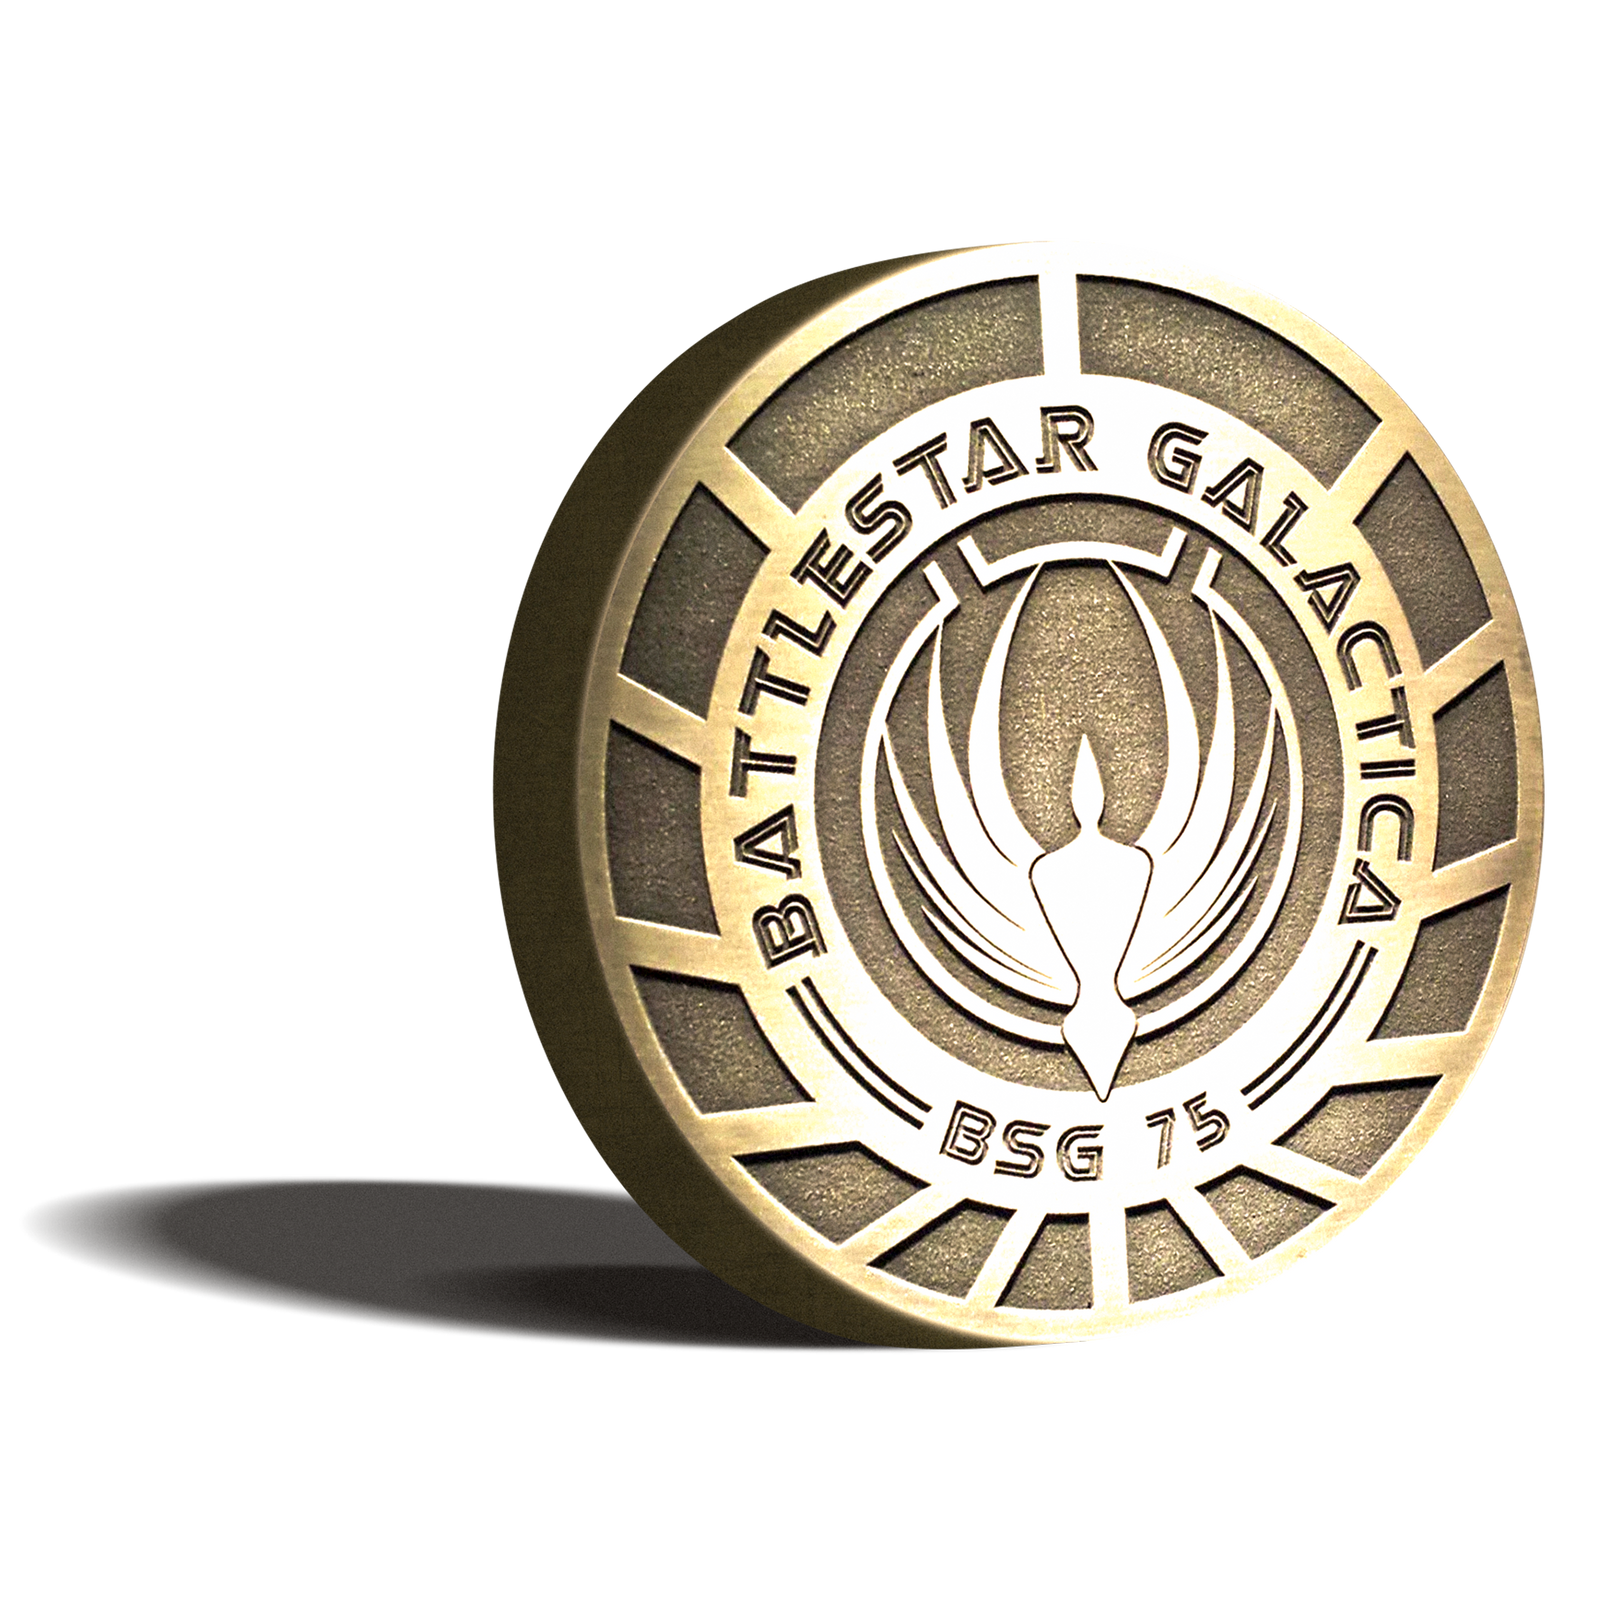 Battlestar Galactica logo.